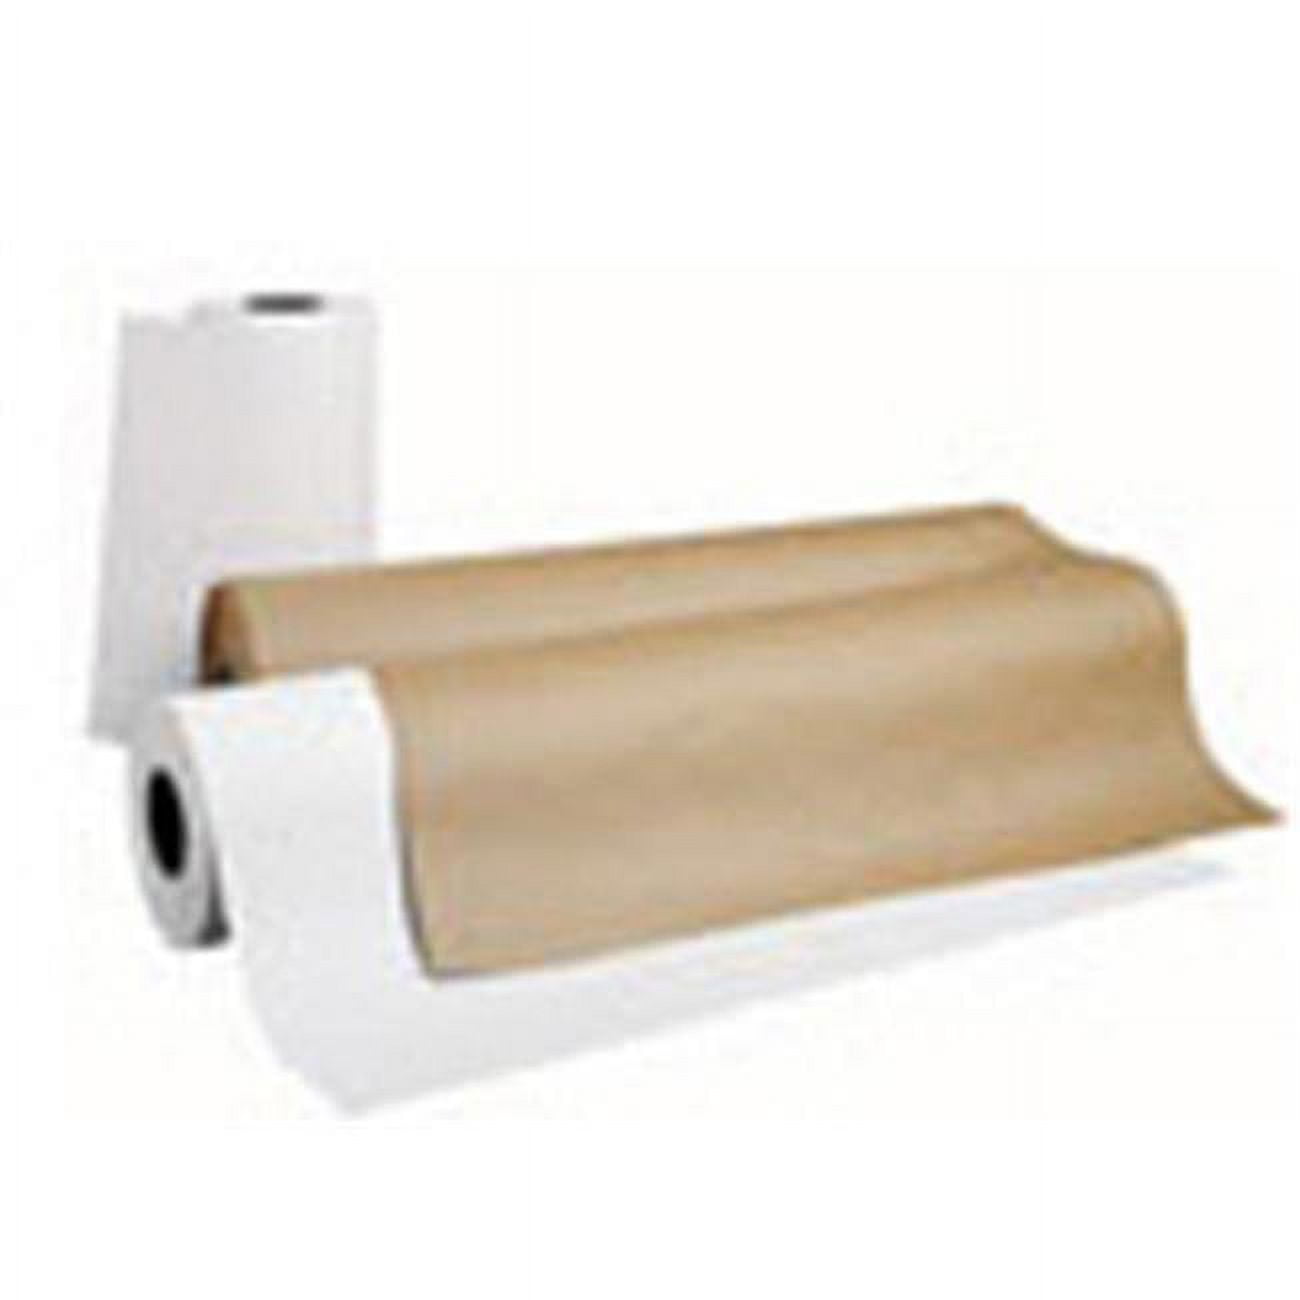 Pacon Kraft Paper Roll, 50lb, 36 x 1000ft, White